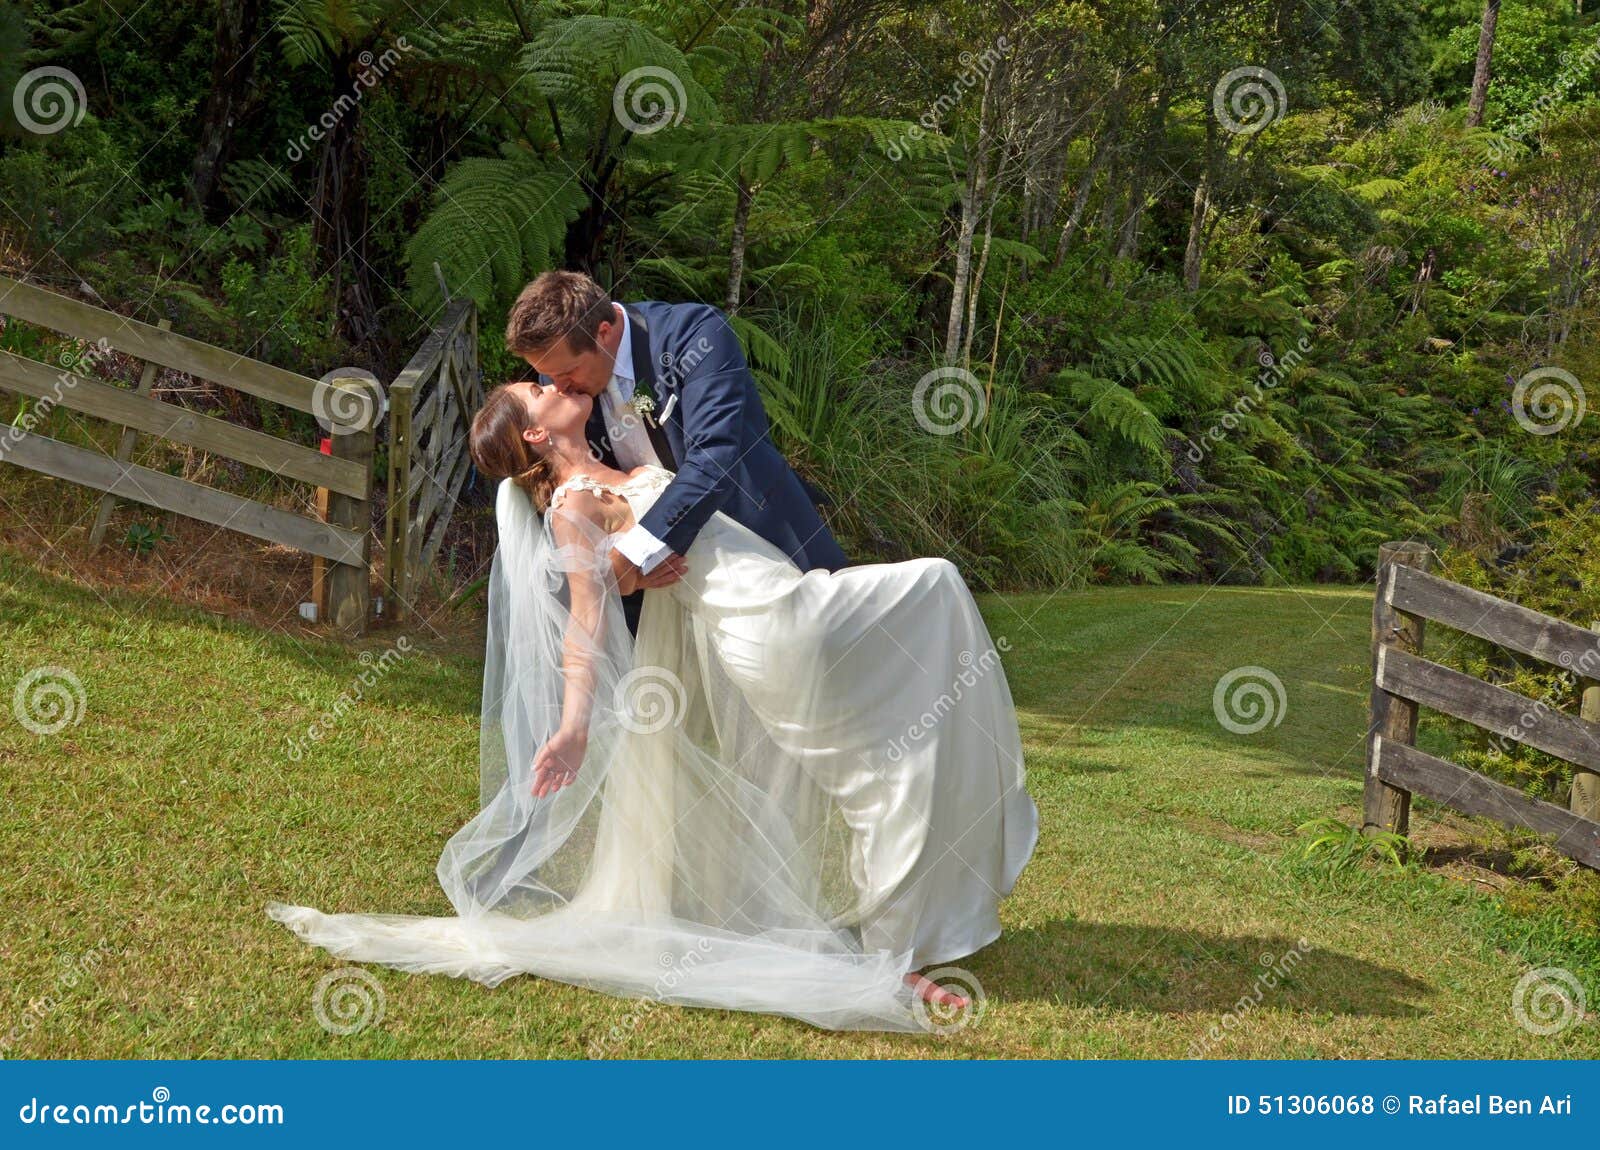 Где муж и жена целовались. Жена муж свадьба поцелуй. Муж и жена целуются на свадьбе. Муж целует жену свадьба. Когда муж жена целуюца.